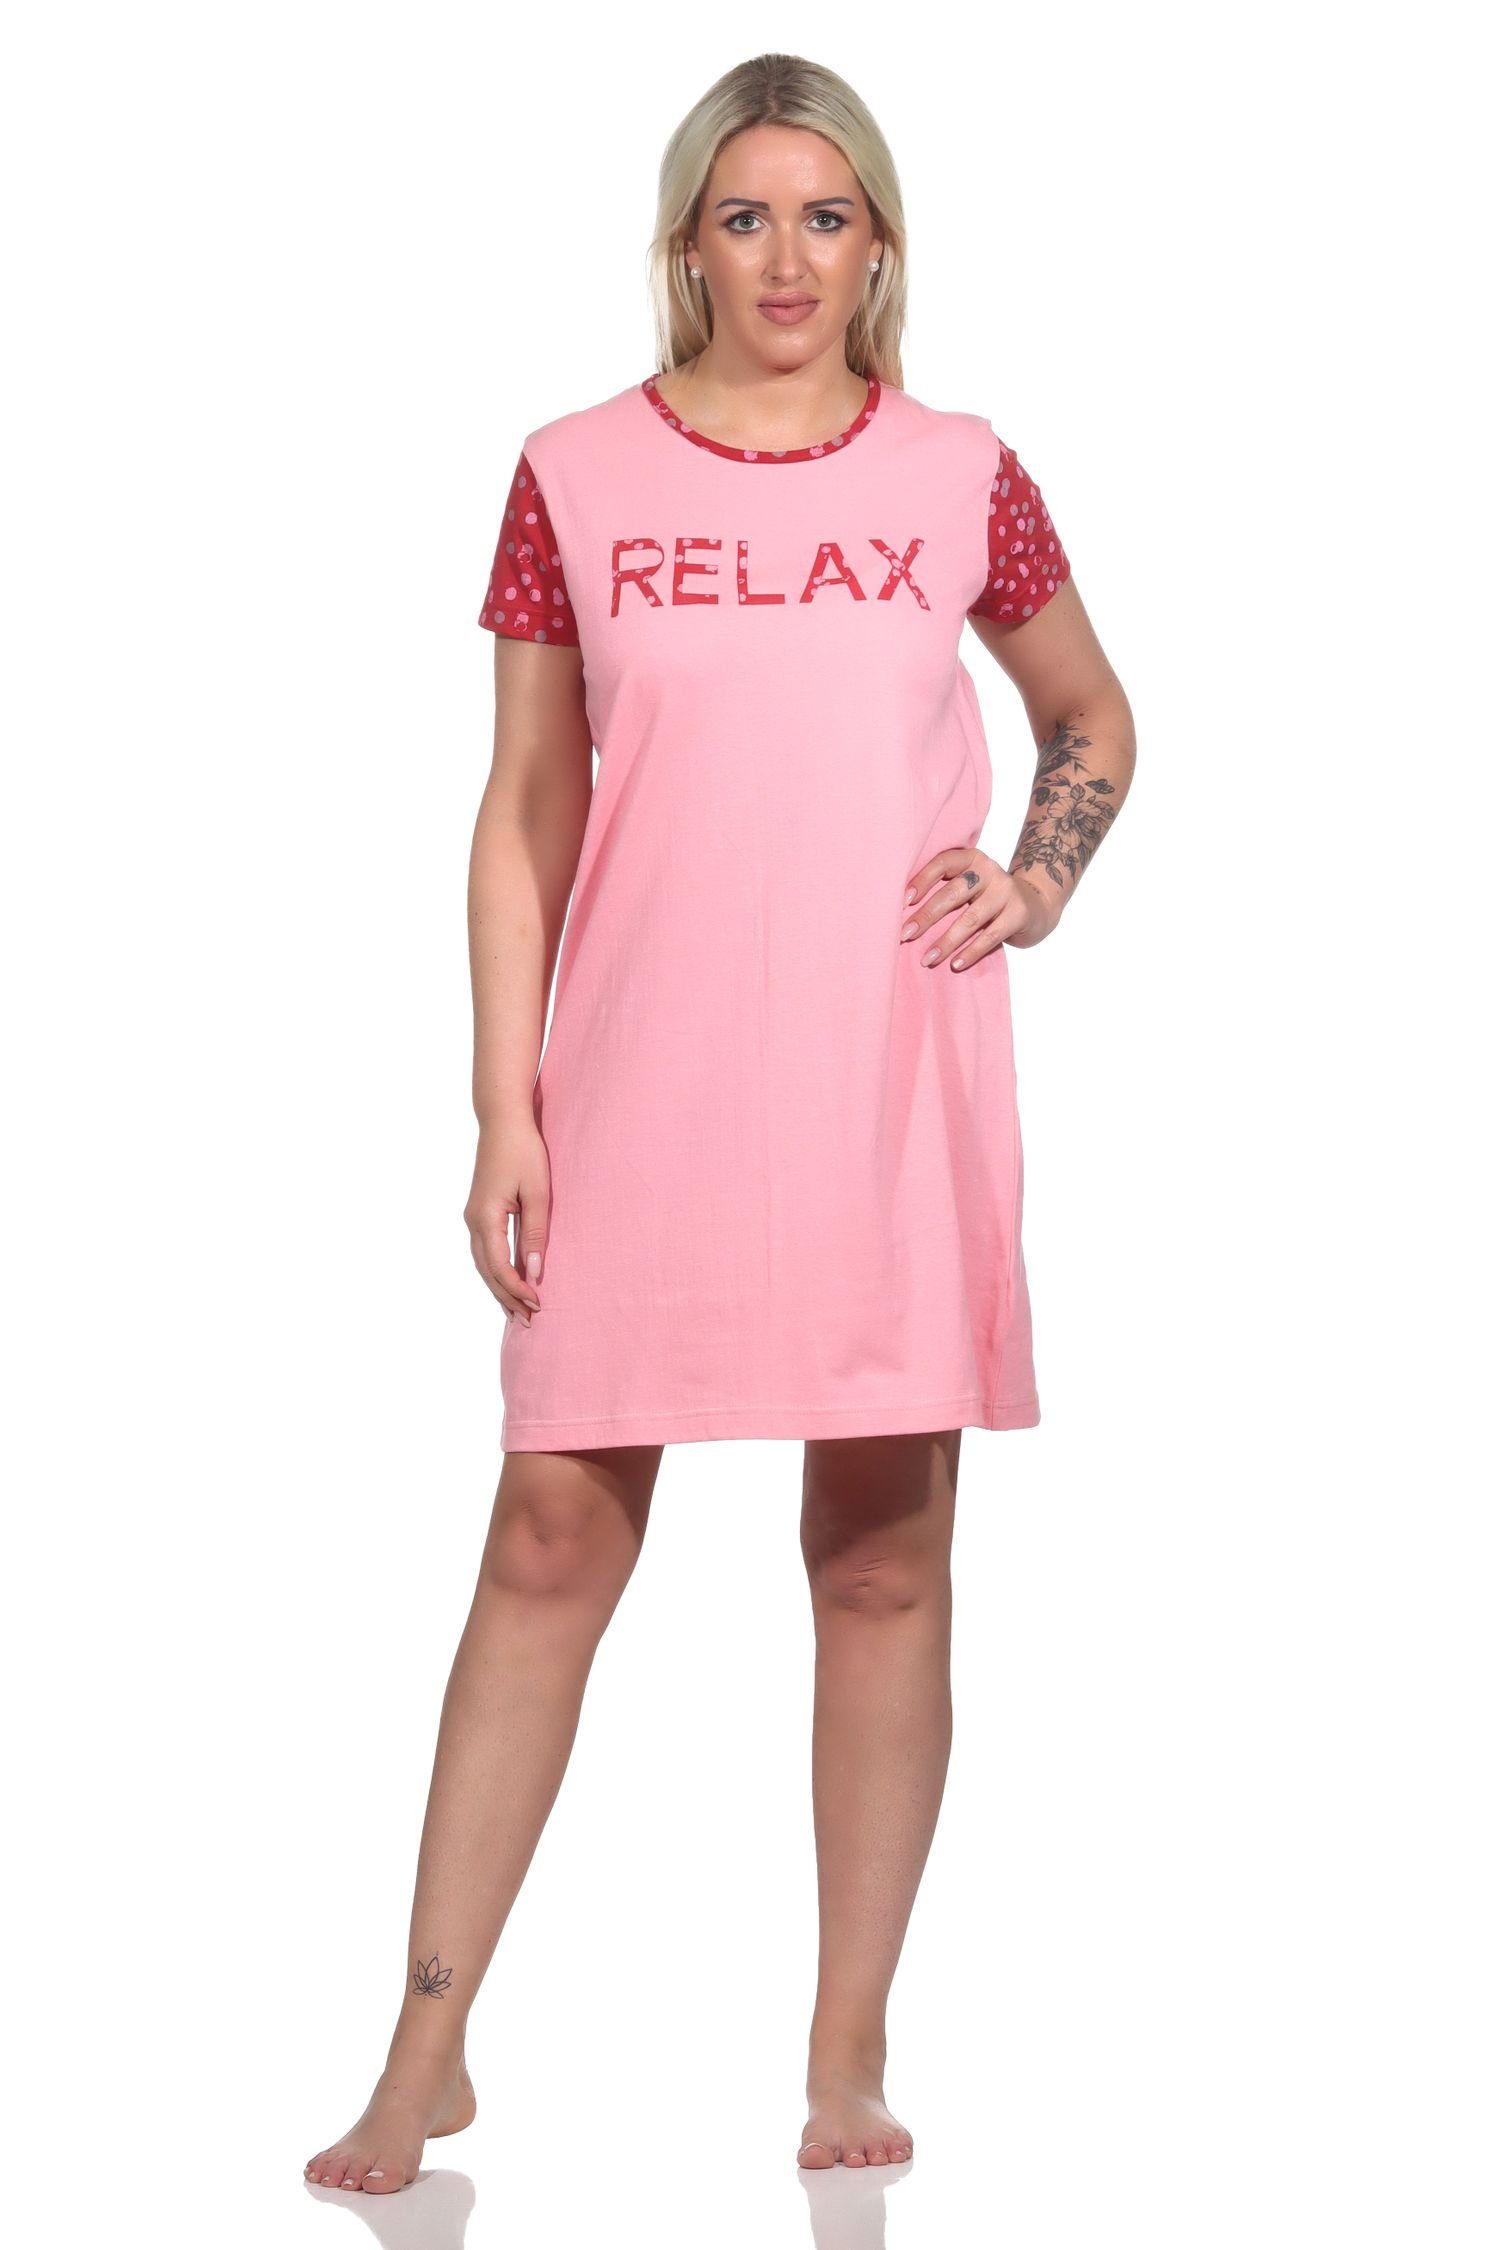 RELAX by Normann Nachthemd Damen Casual - Kurzarm im 10 757 122 Nachthemd Look rosa